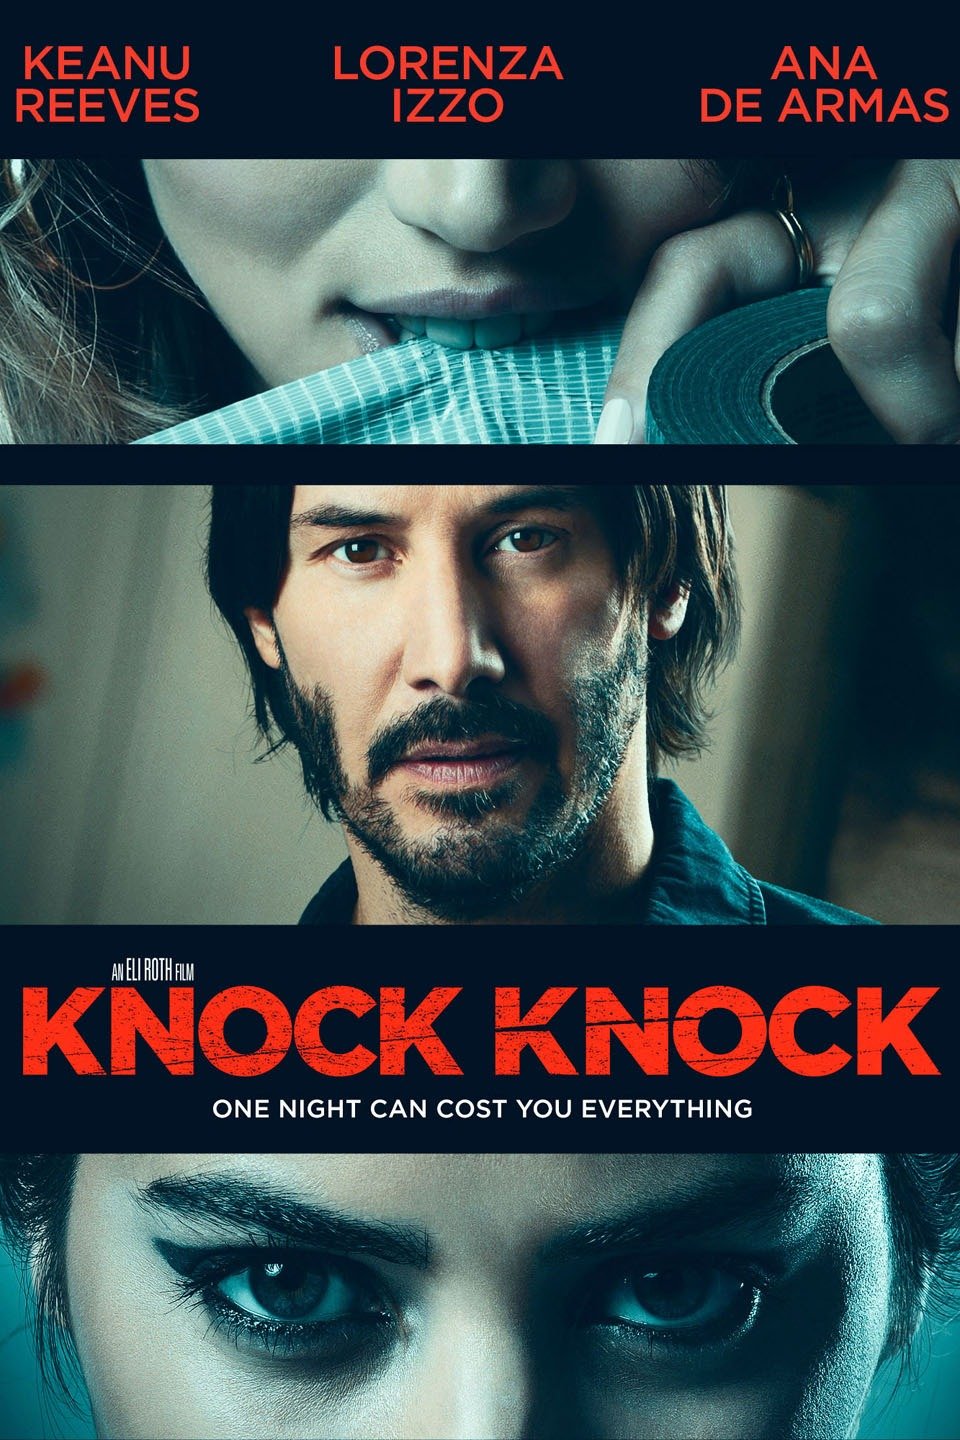 [MINI Super-HQ] Knock Knock (2015) ล่อมาเชือด [1080p] [พากย์ไทย 5.1 + เสียงอังกฤษ DTS] [บรรยายไทย + อังกฤษ] [เสียงไทย + ซับไทย] [OPENLOAD]